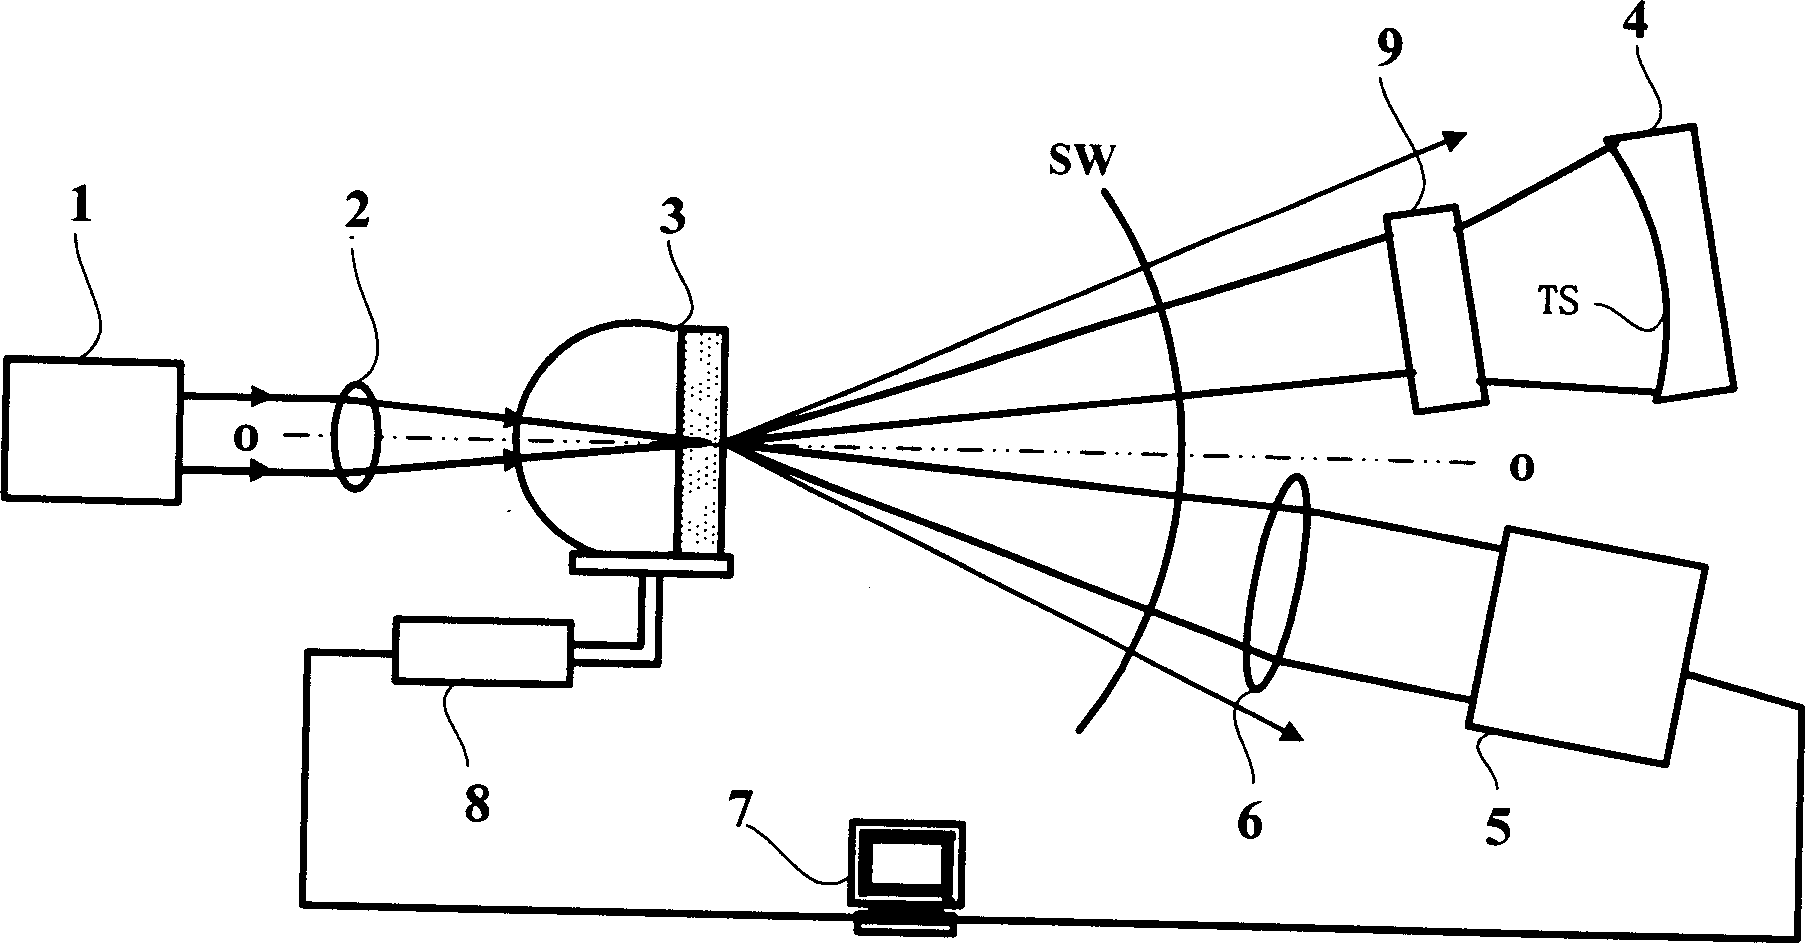 Spot diffraction interferometer for measuring surface shape